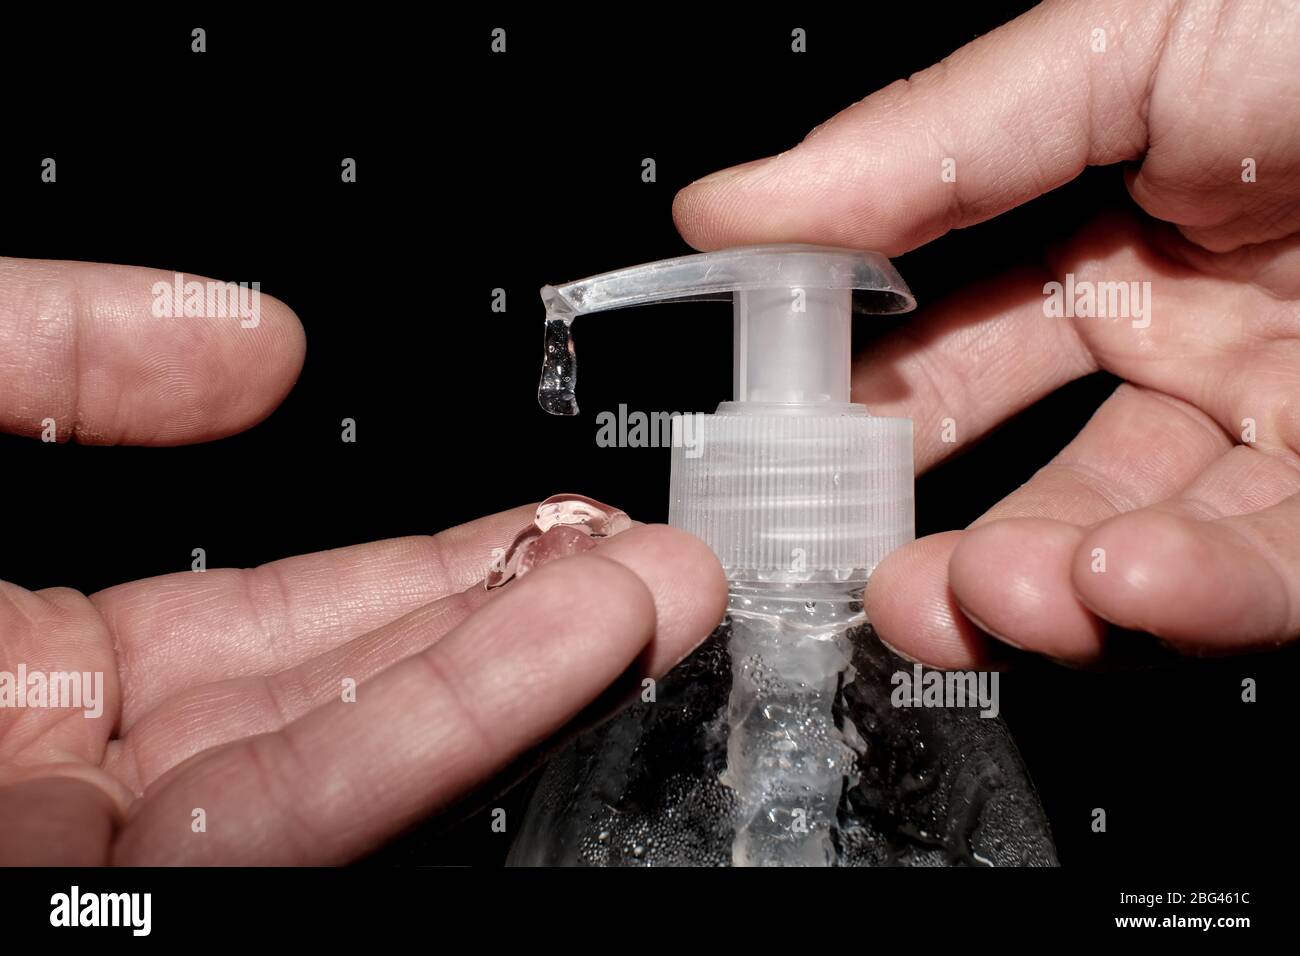 Man sanitize hand with alcohol hand sanitizer dispenser,corona virus covid19 infection disease Stock Photo